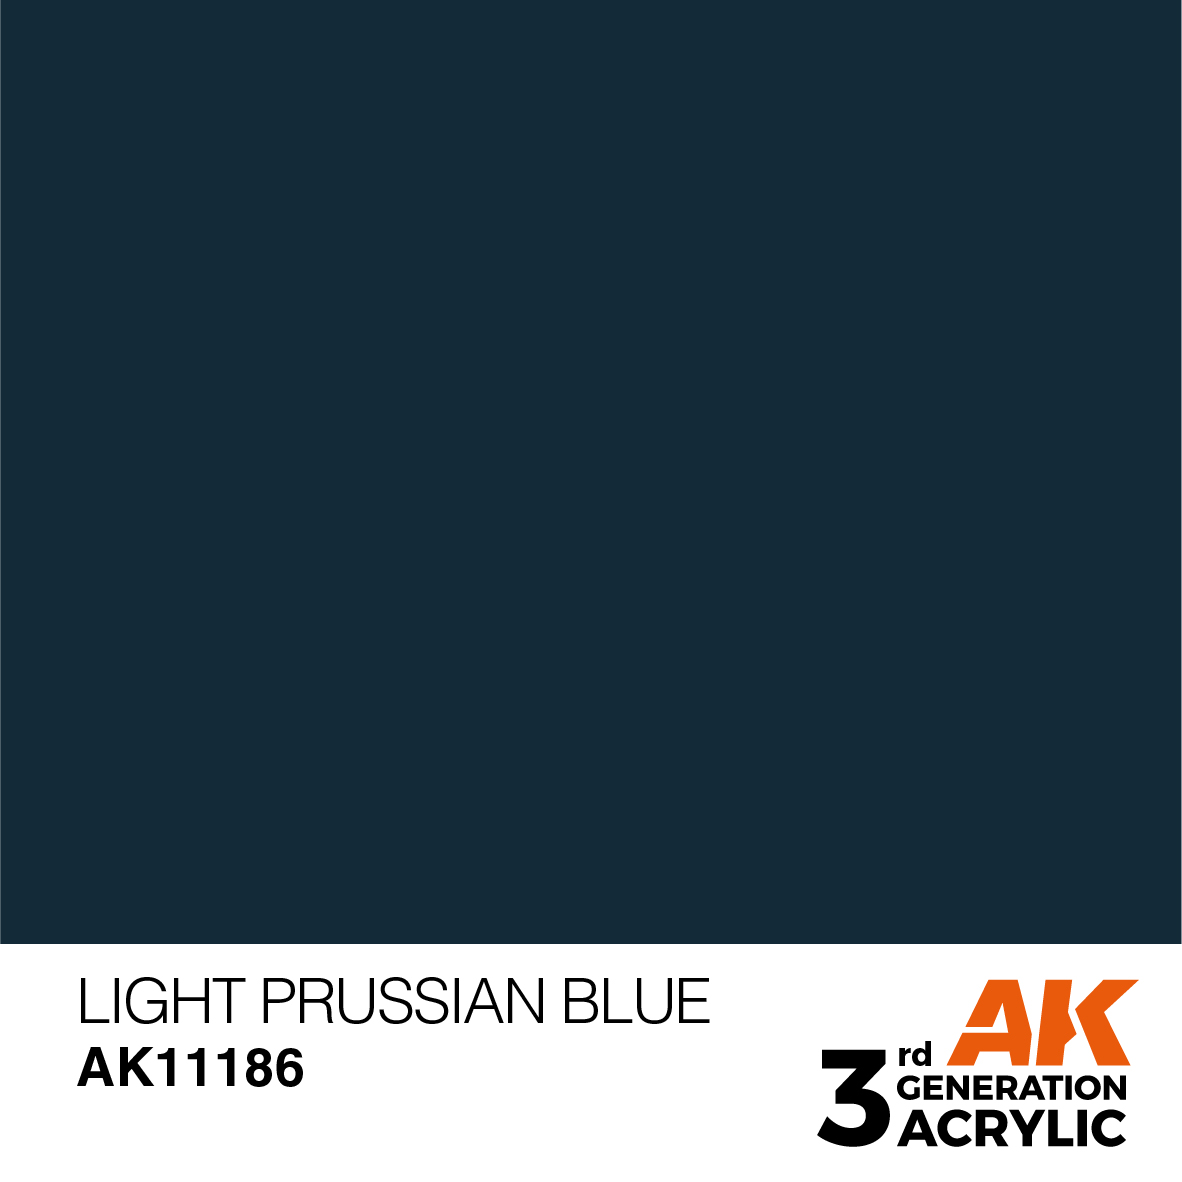 LIGHT PRUSSIAN BLUE – STANDARD